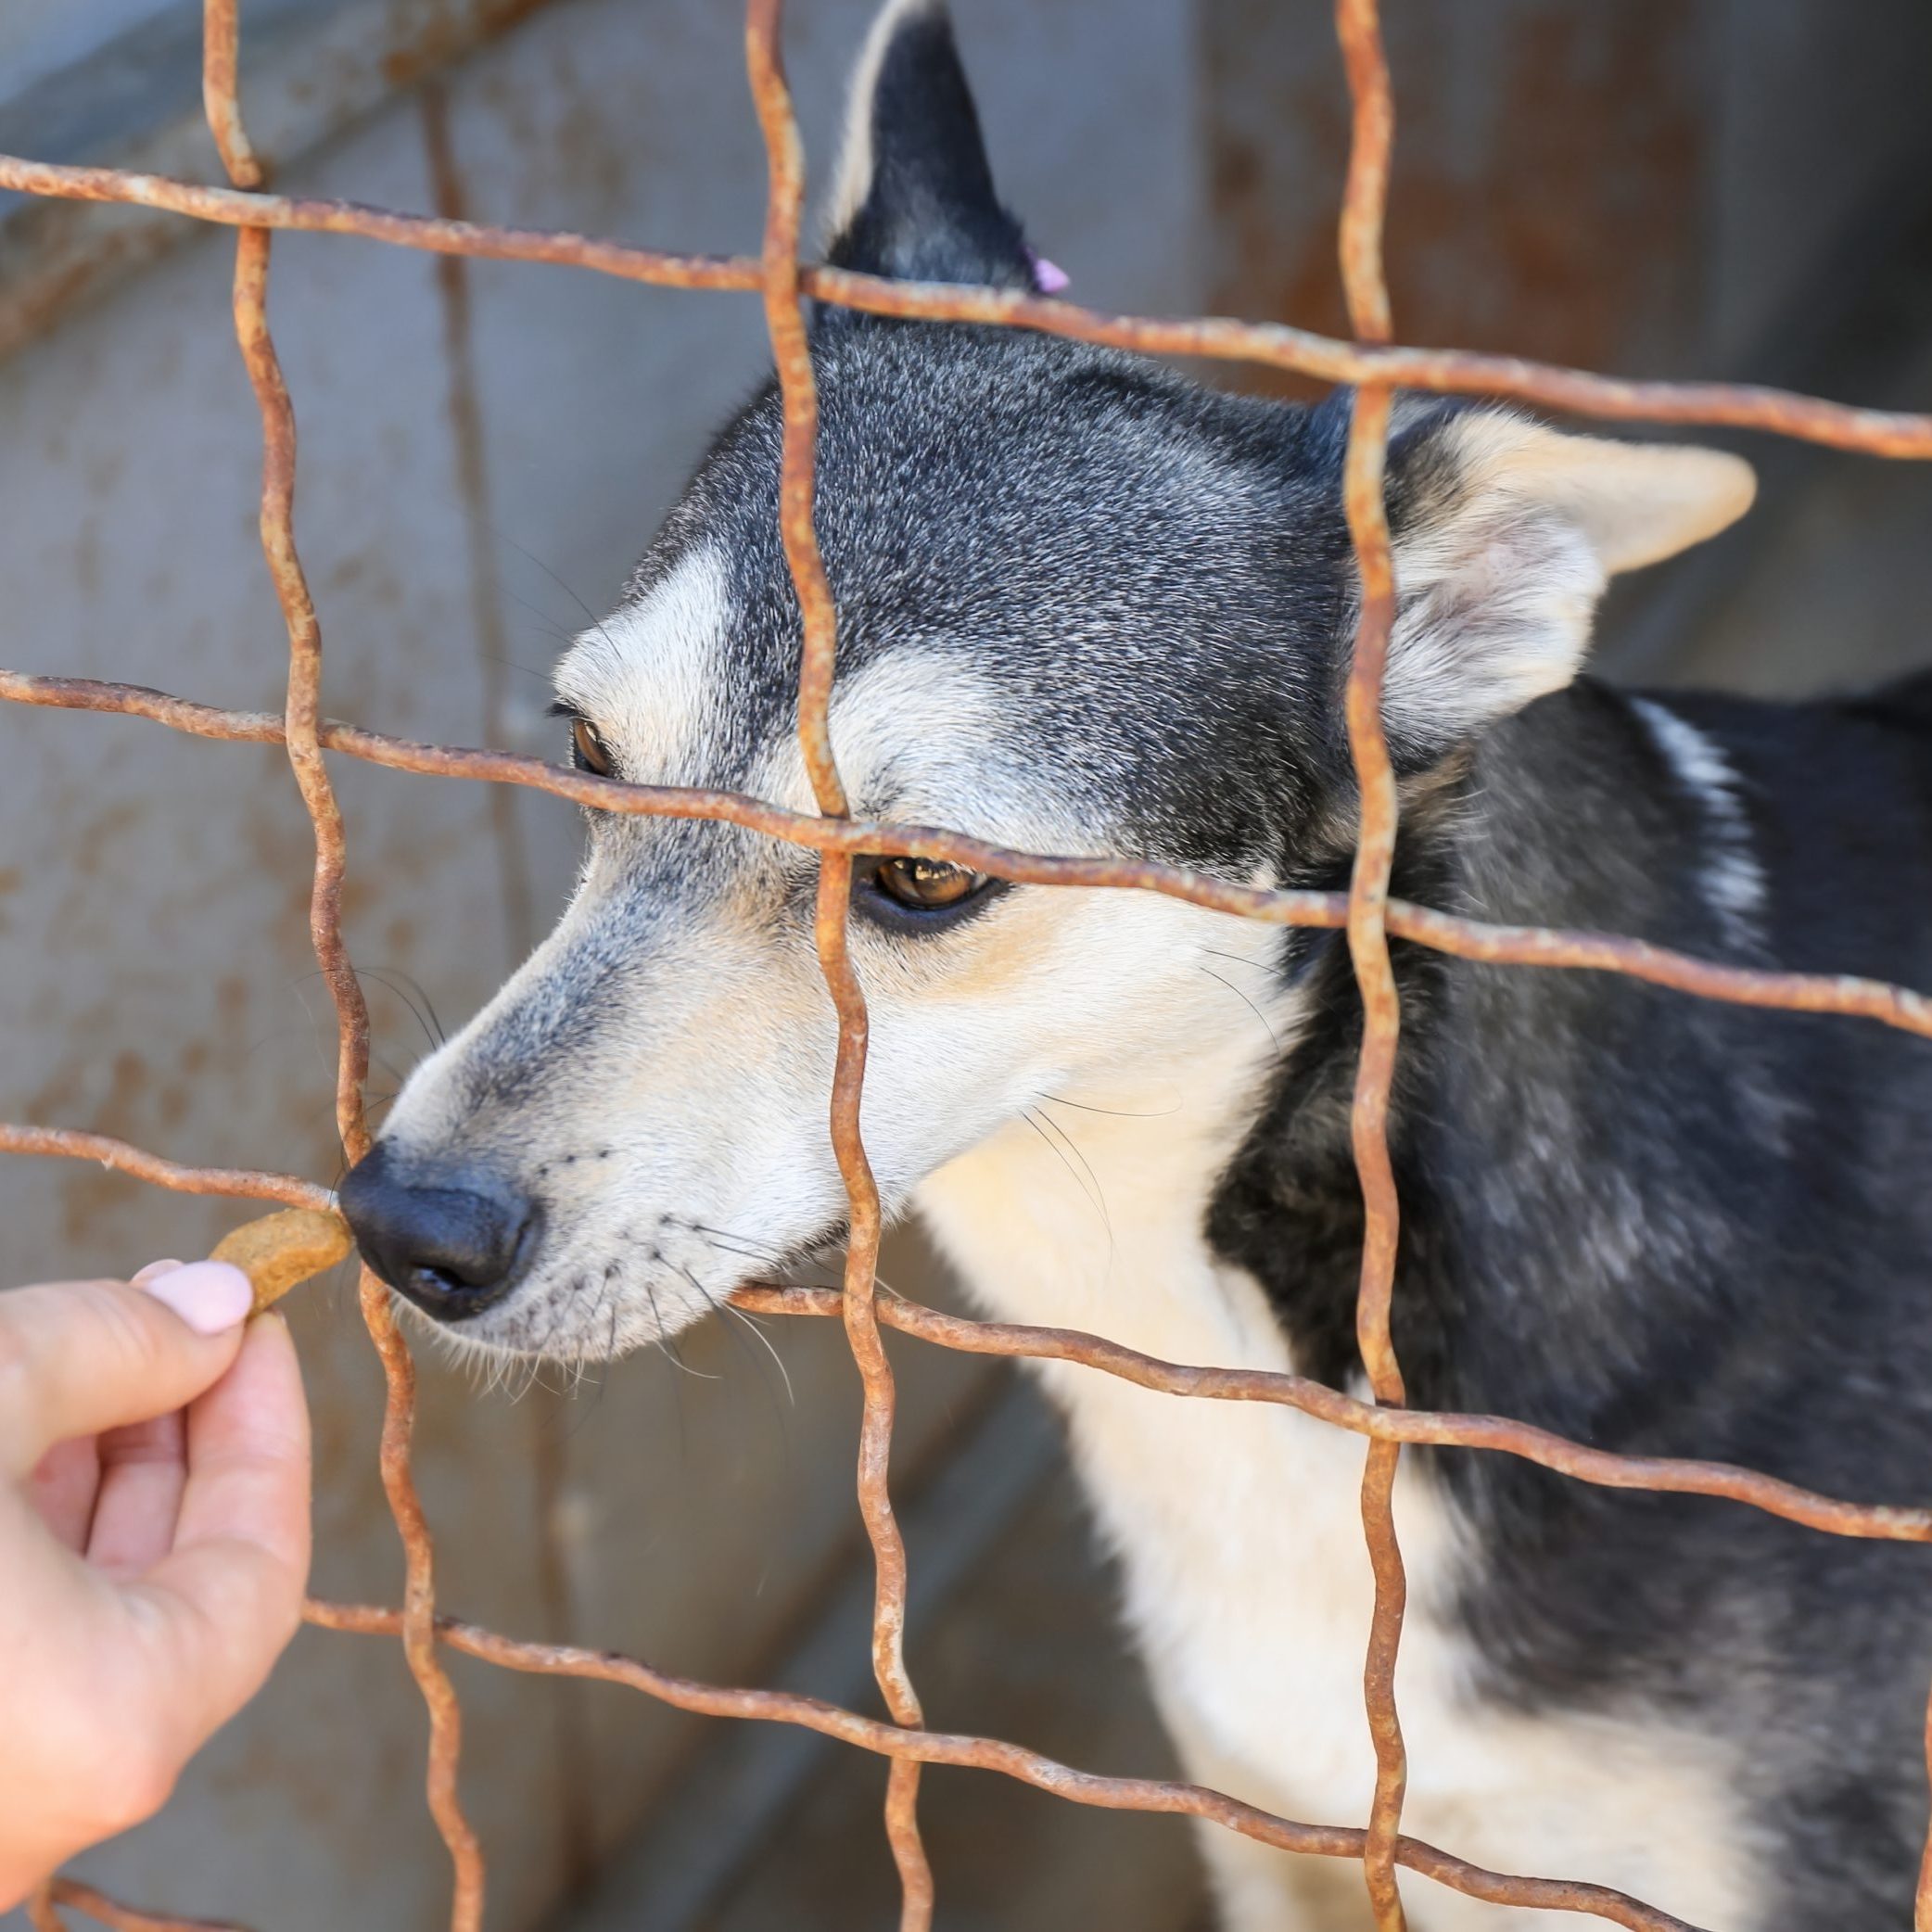 Volunteer feeding dog at animal shelter. Adoption concept